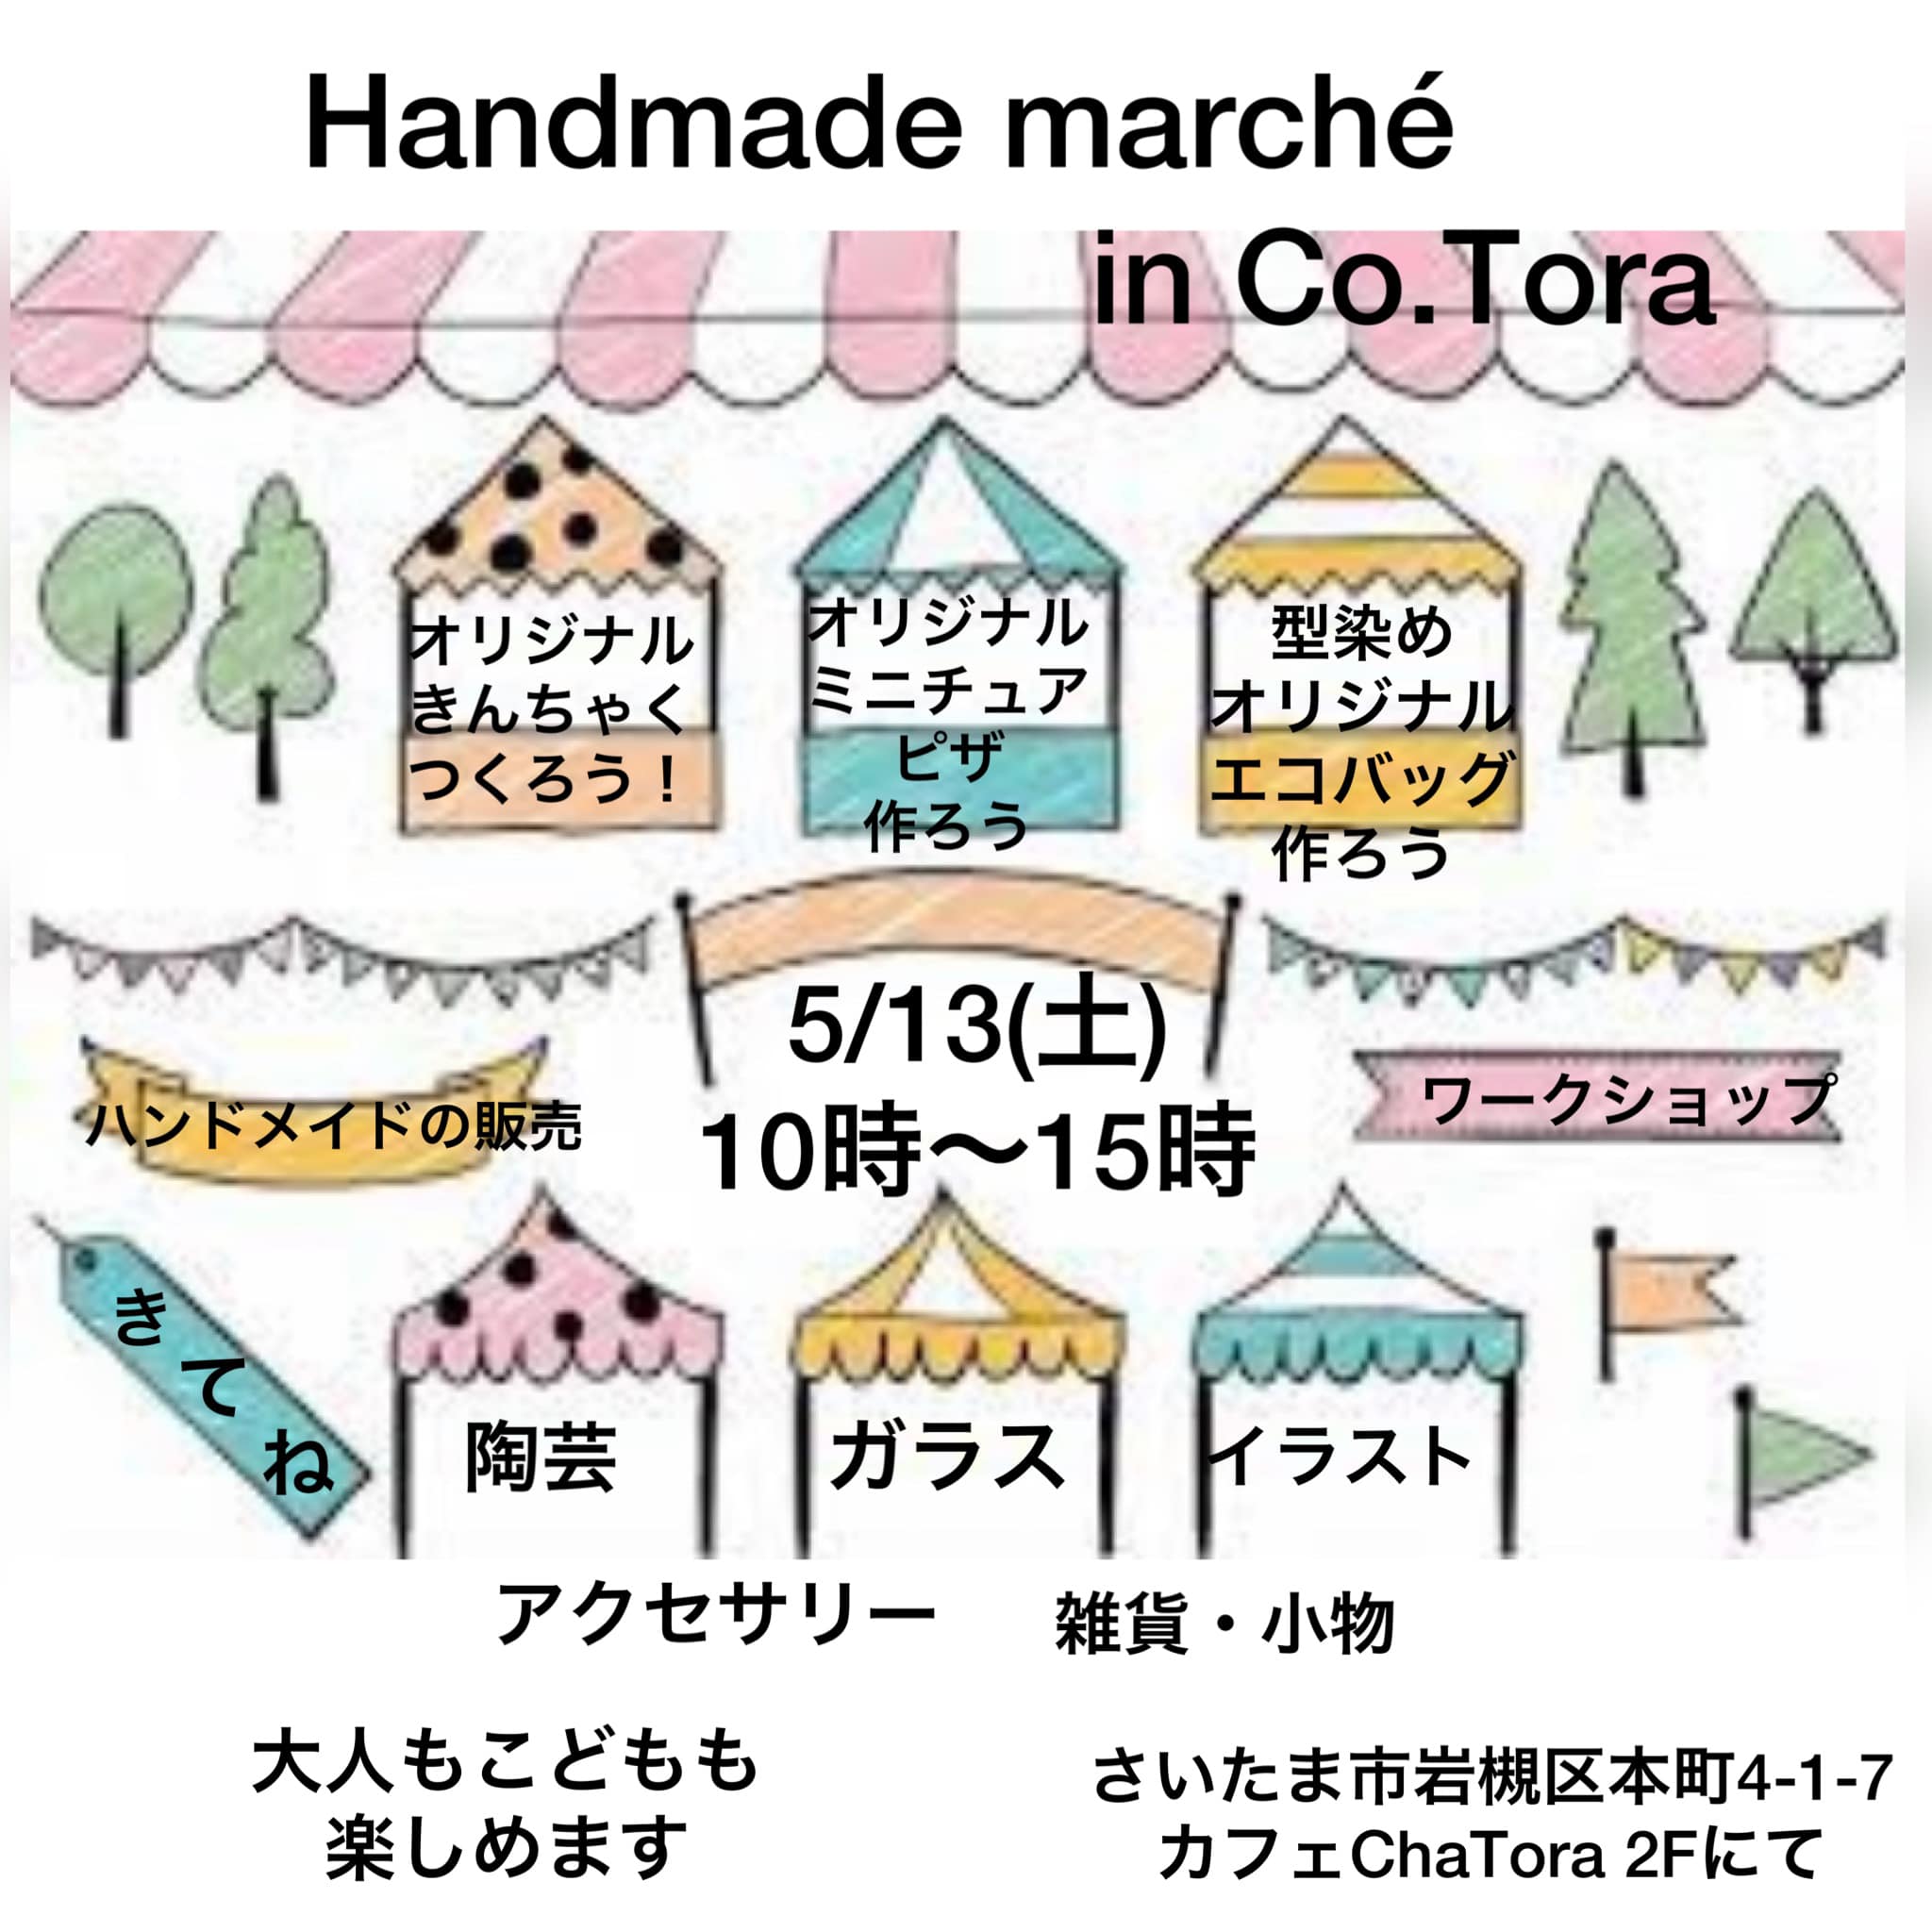 Handmade marche in Co.Tora